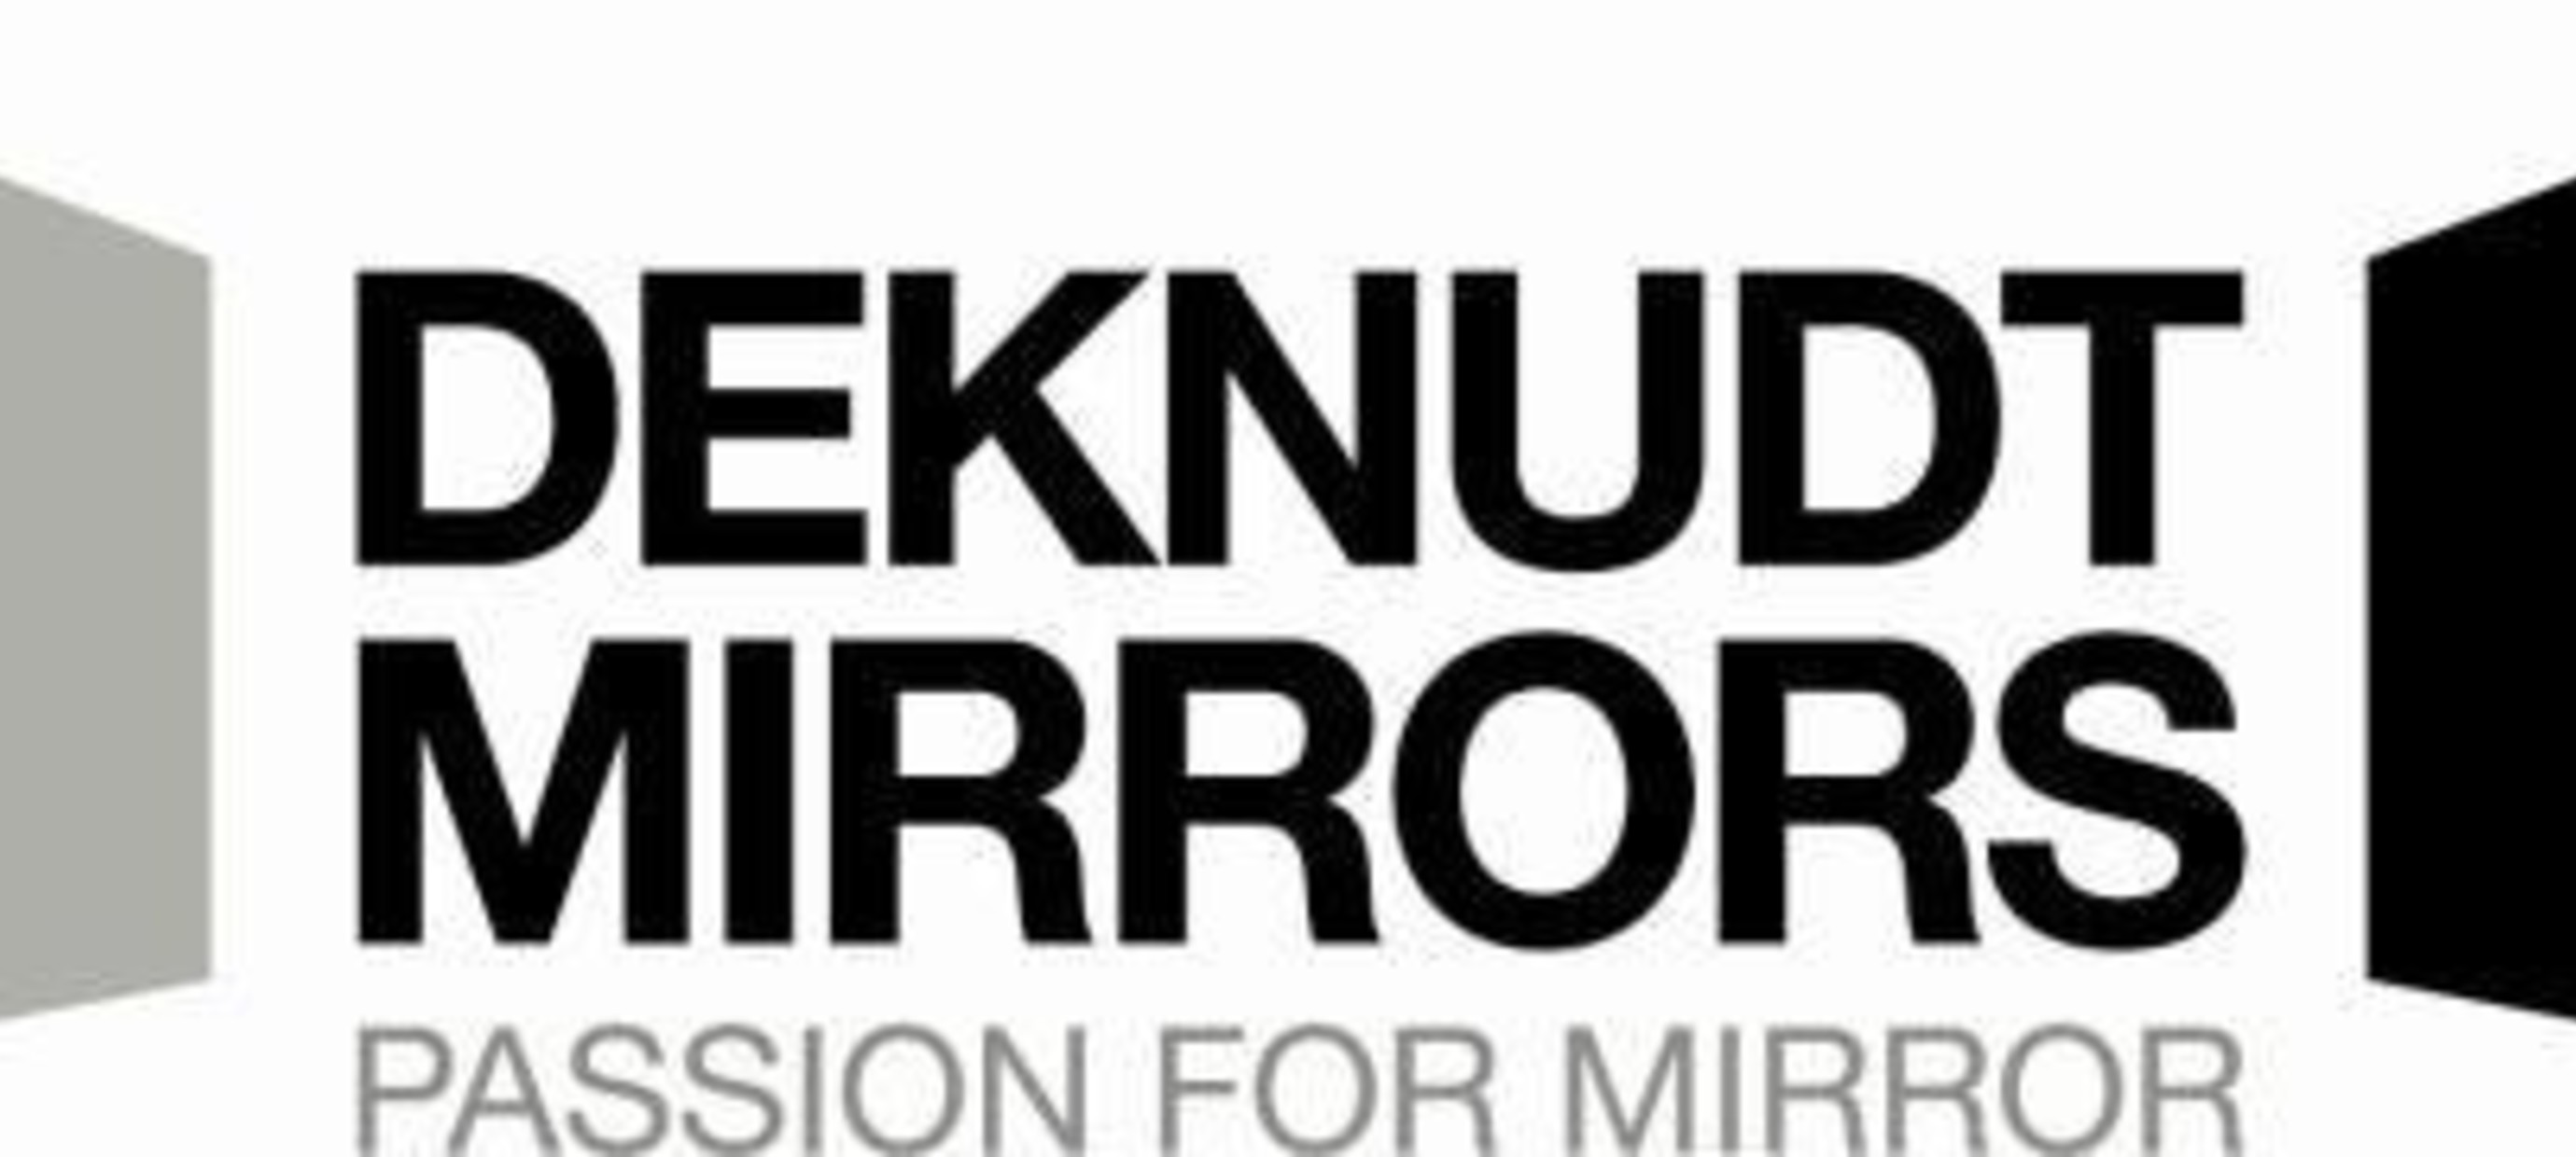 The design mirrors from Deknudt Mirror Works